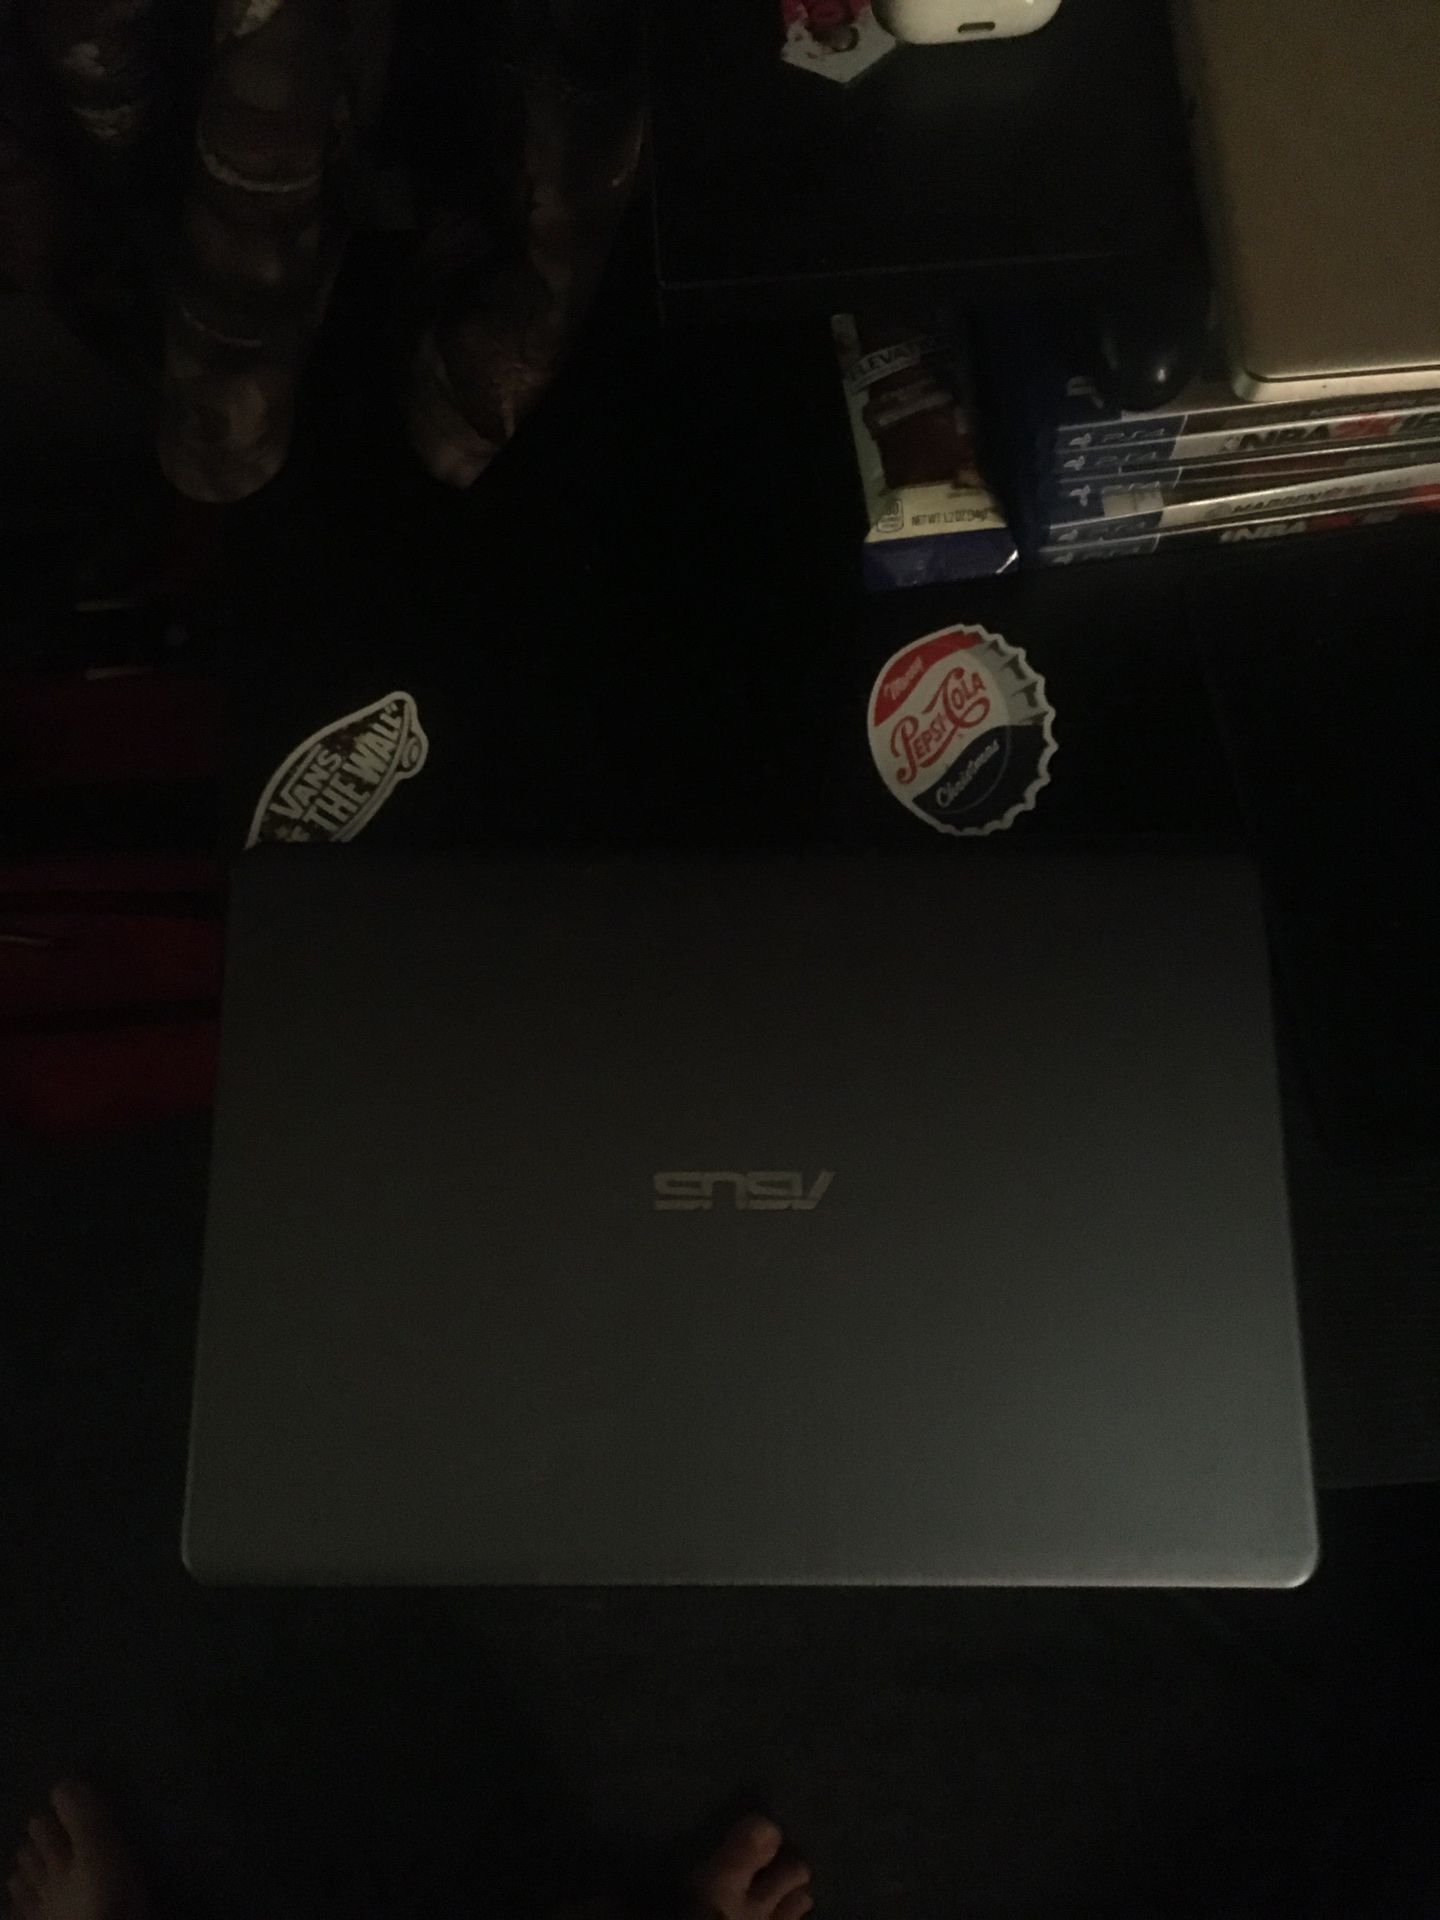 Asus laptop,, model number L406M